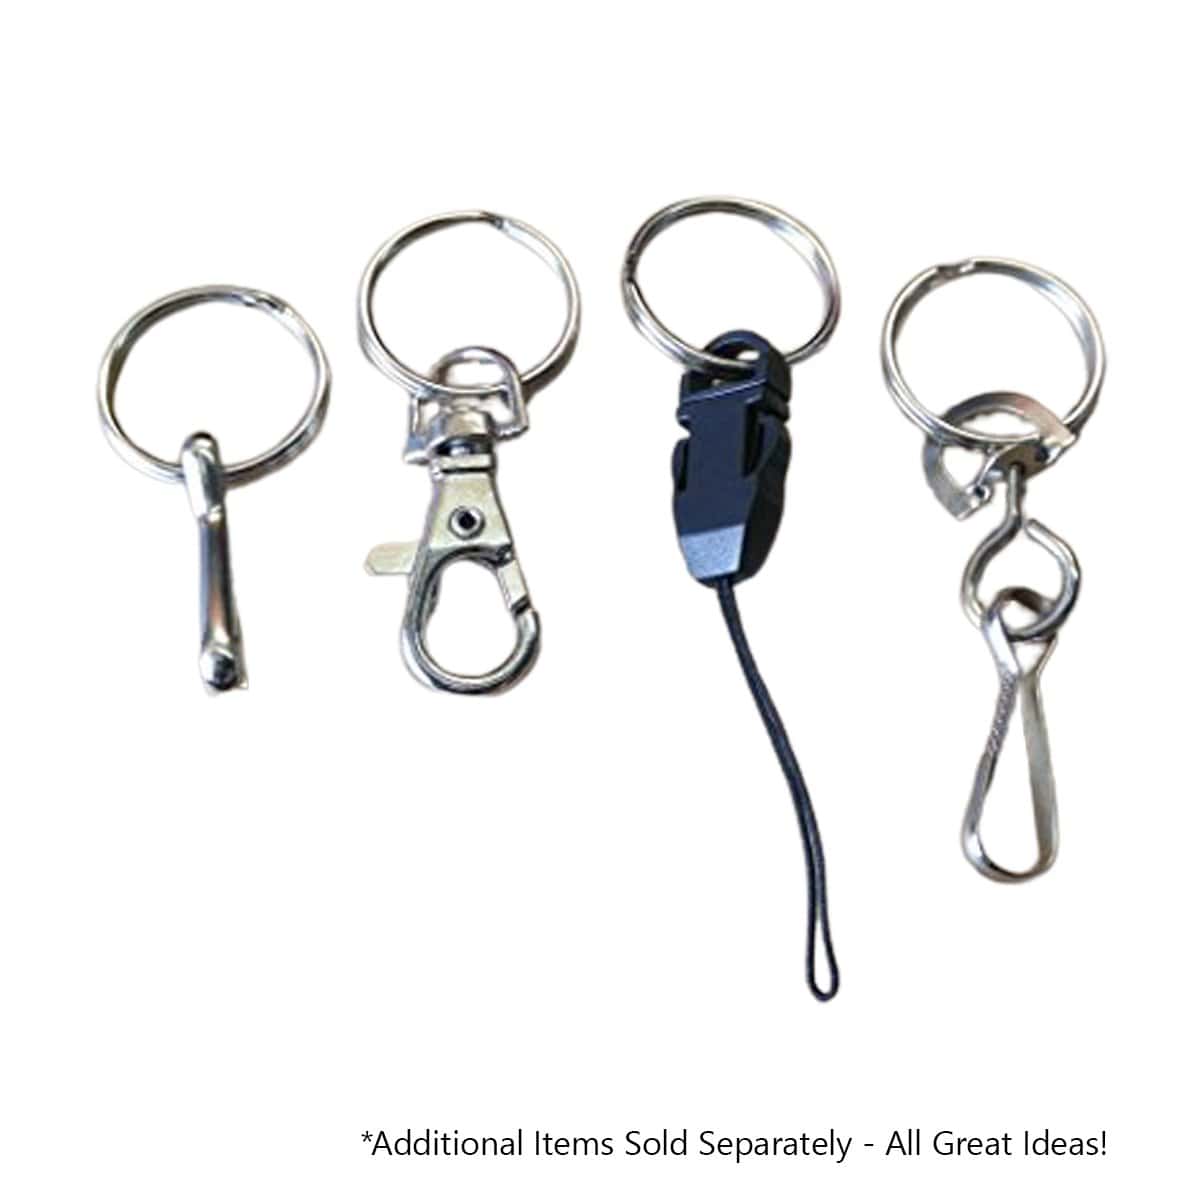 ATB 48 Metal Key Rings Split Heavy Duty Strong Keyrings Car Office Home Dog Tag 1